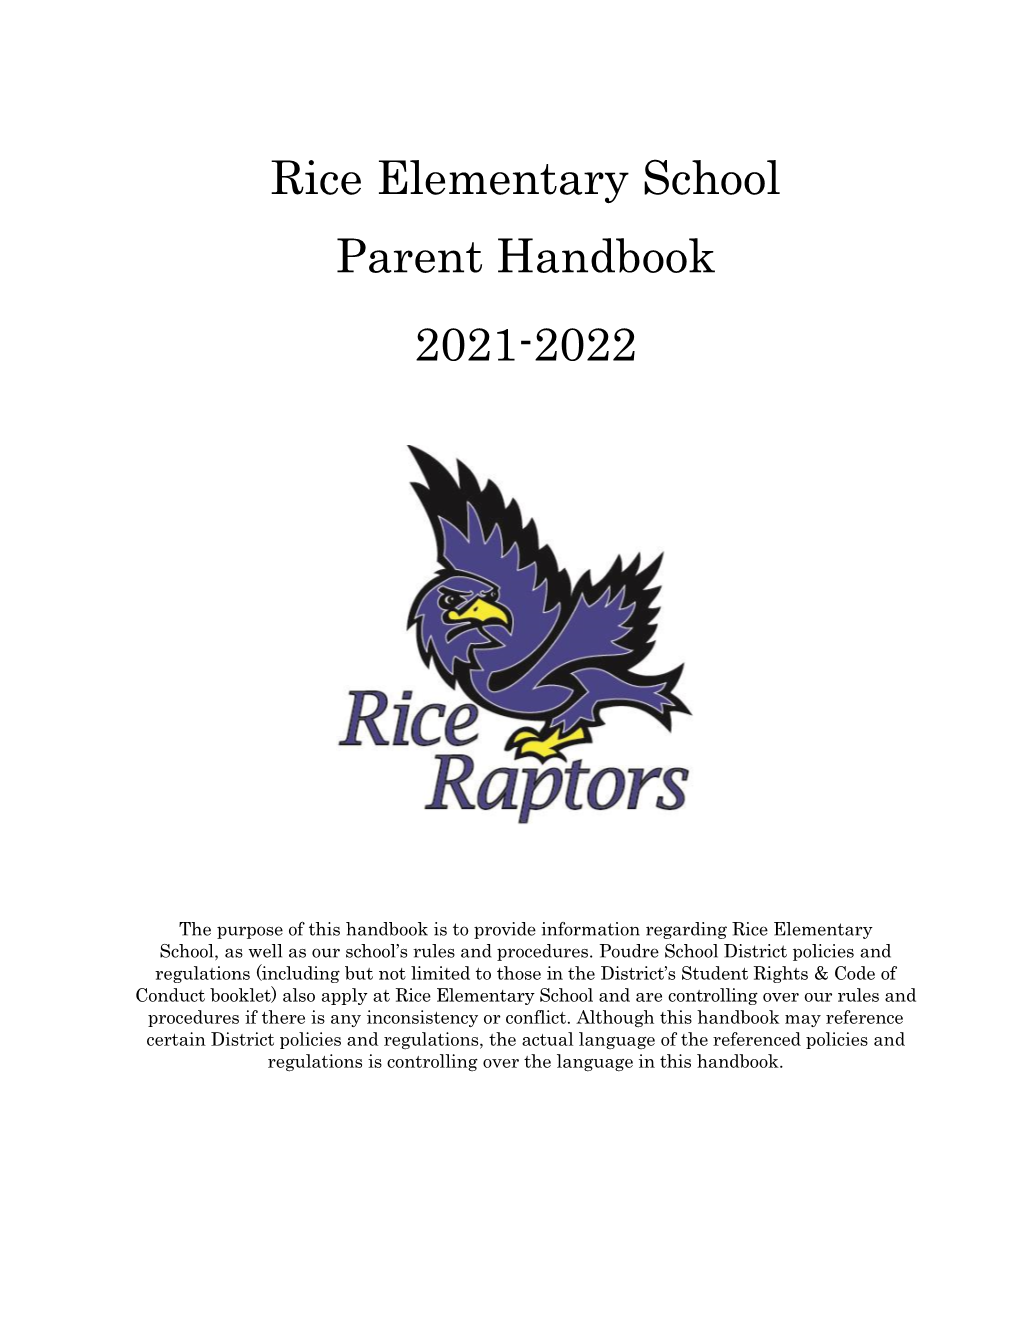 Rice Elementary School Parent Handbook 2021-2022